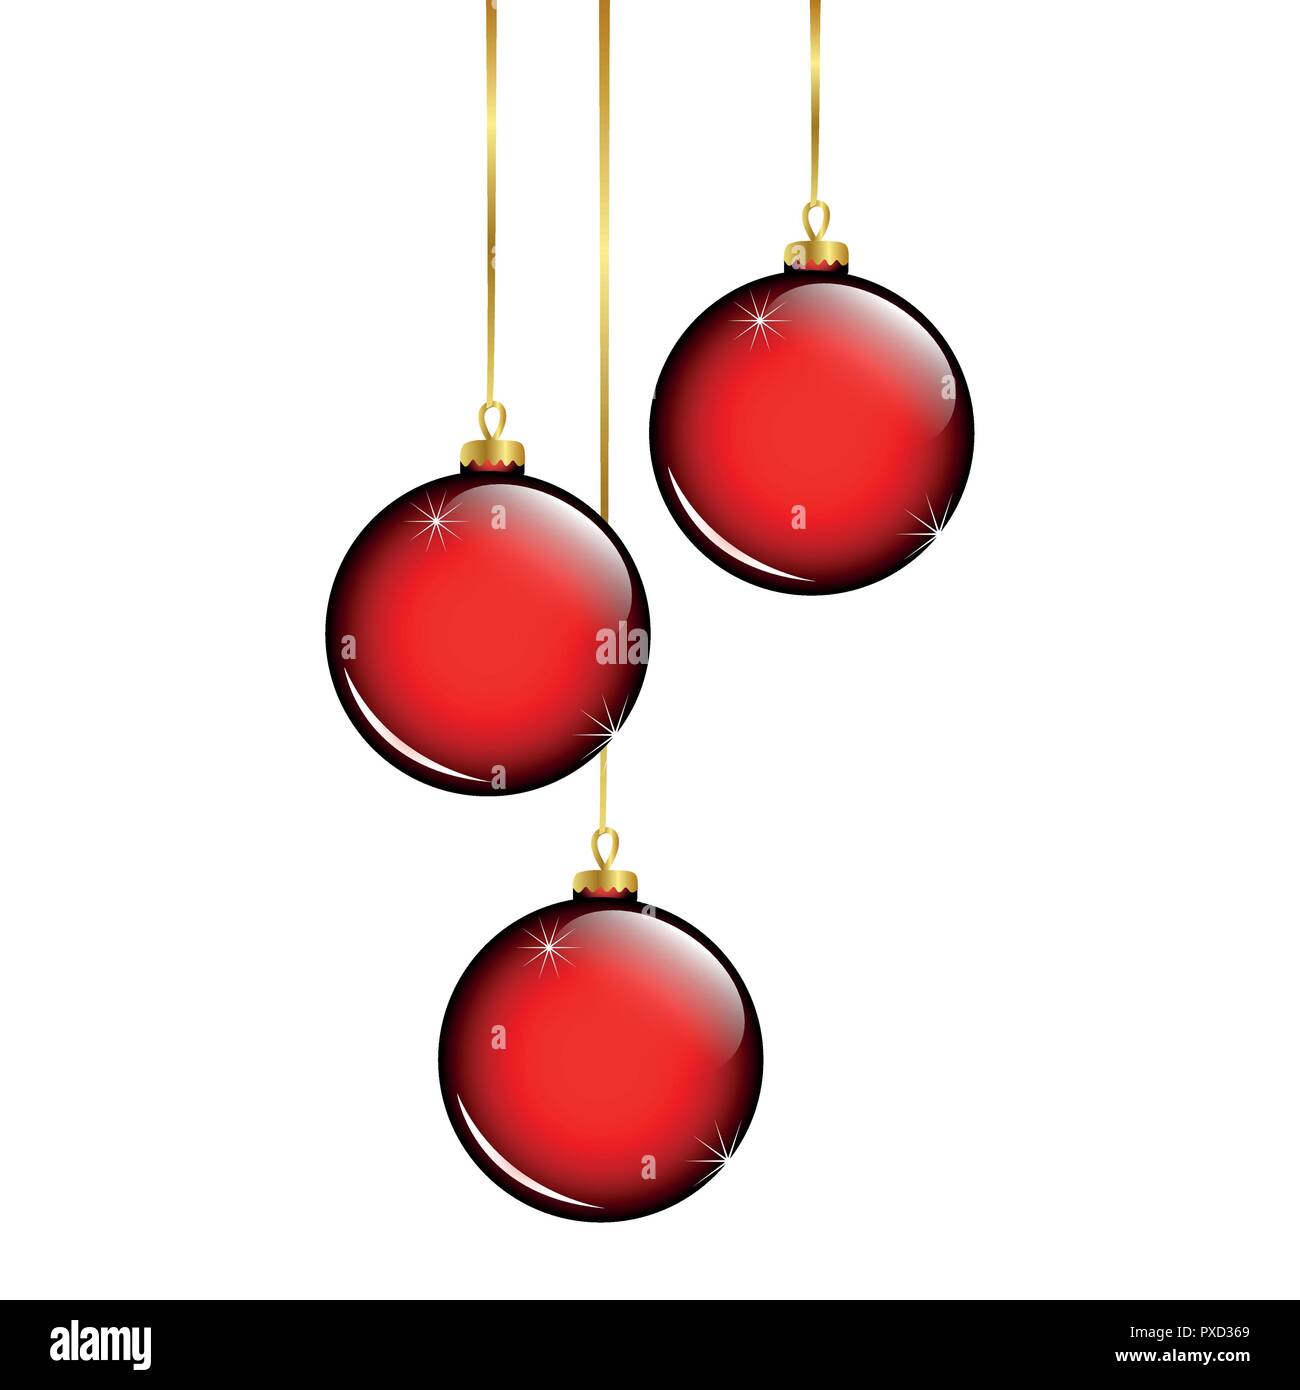 Rot und gold Christbaumkugel Weihnachten Dekoration Vektor-illustration EPS 10. Stock Vektor